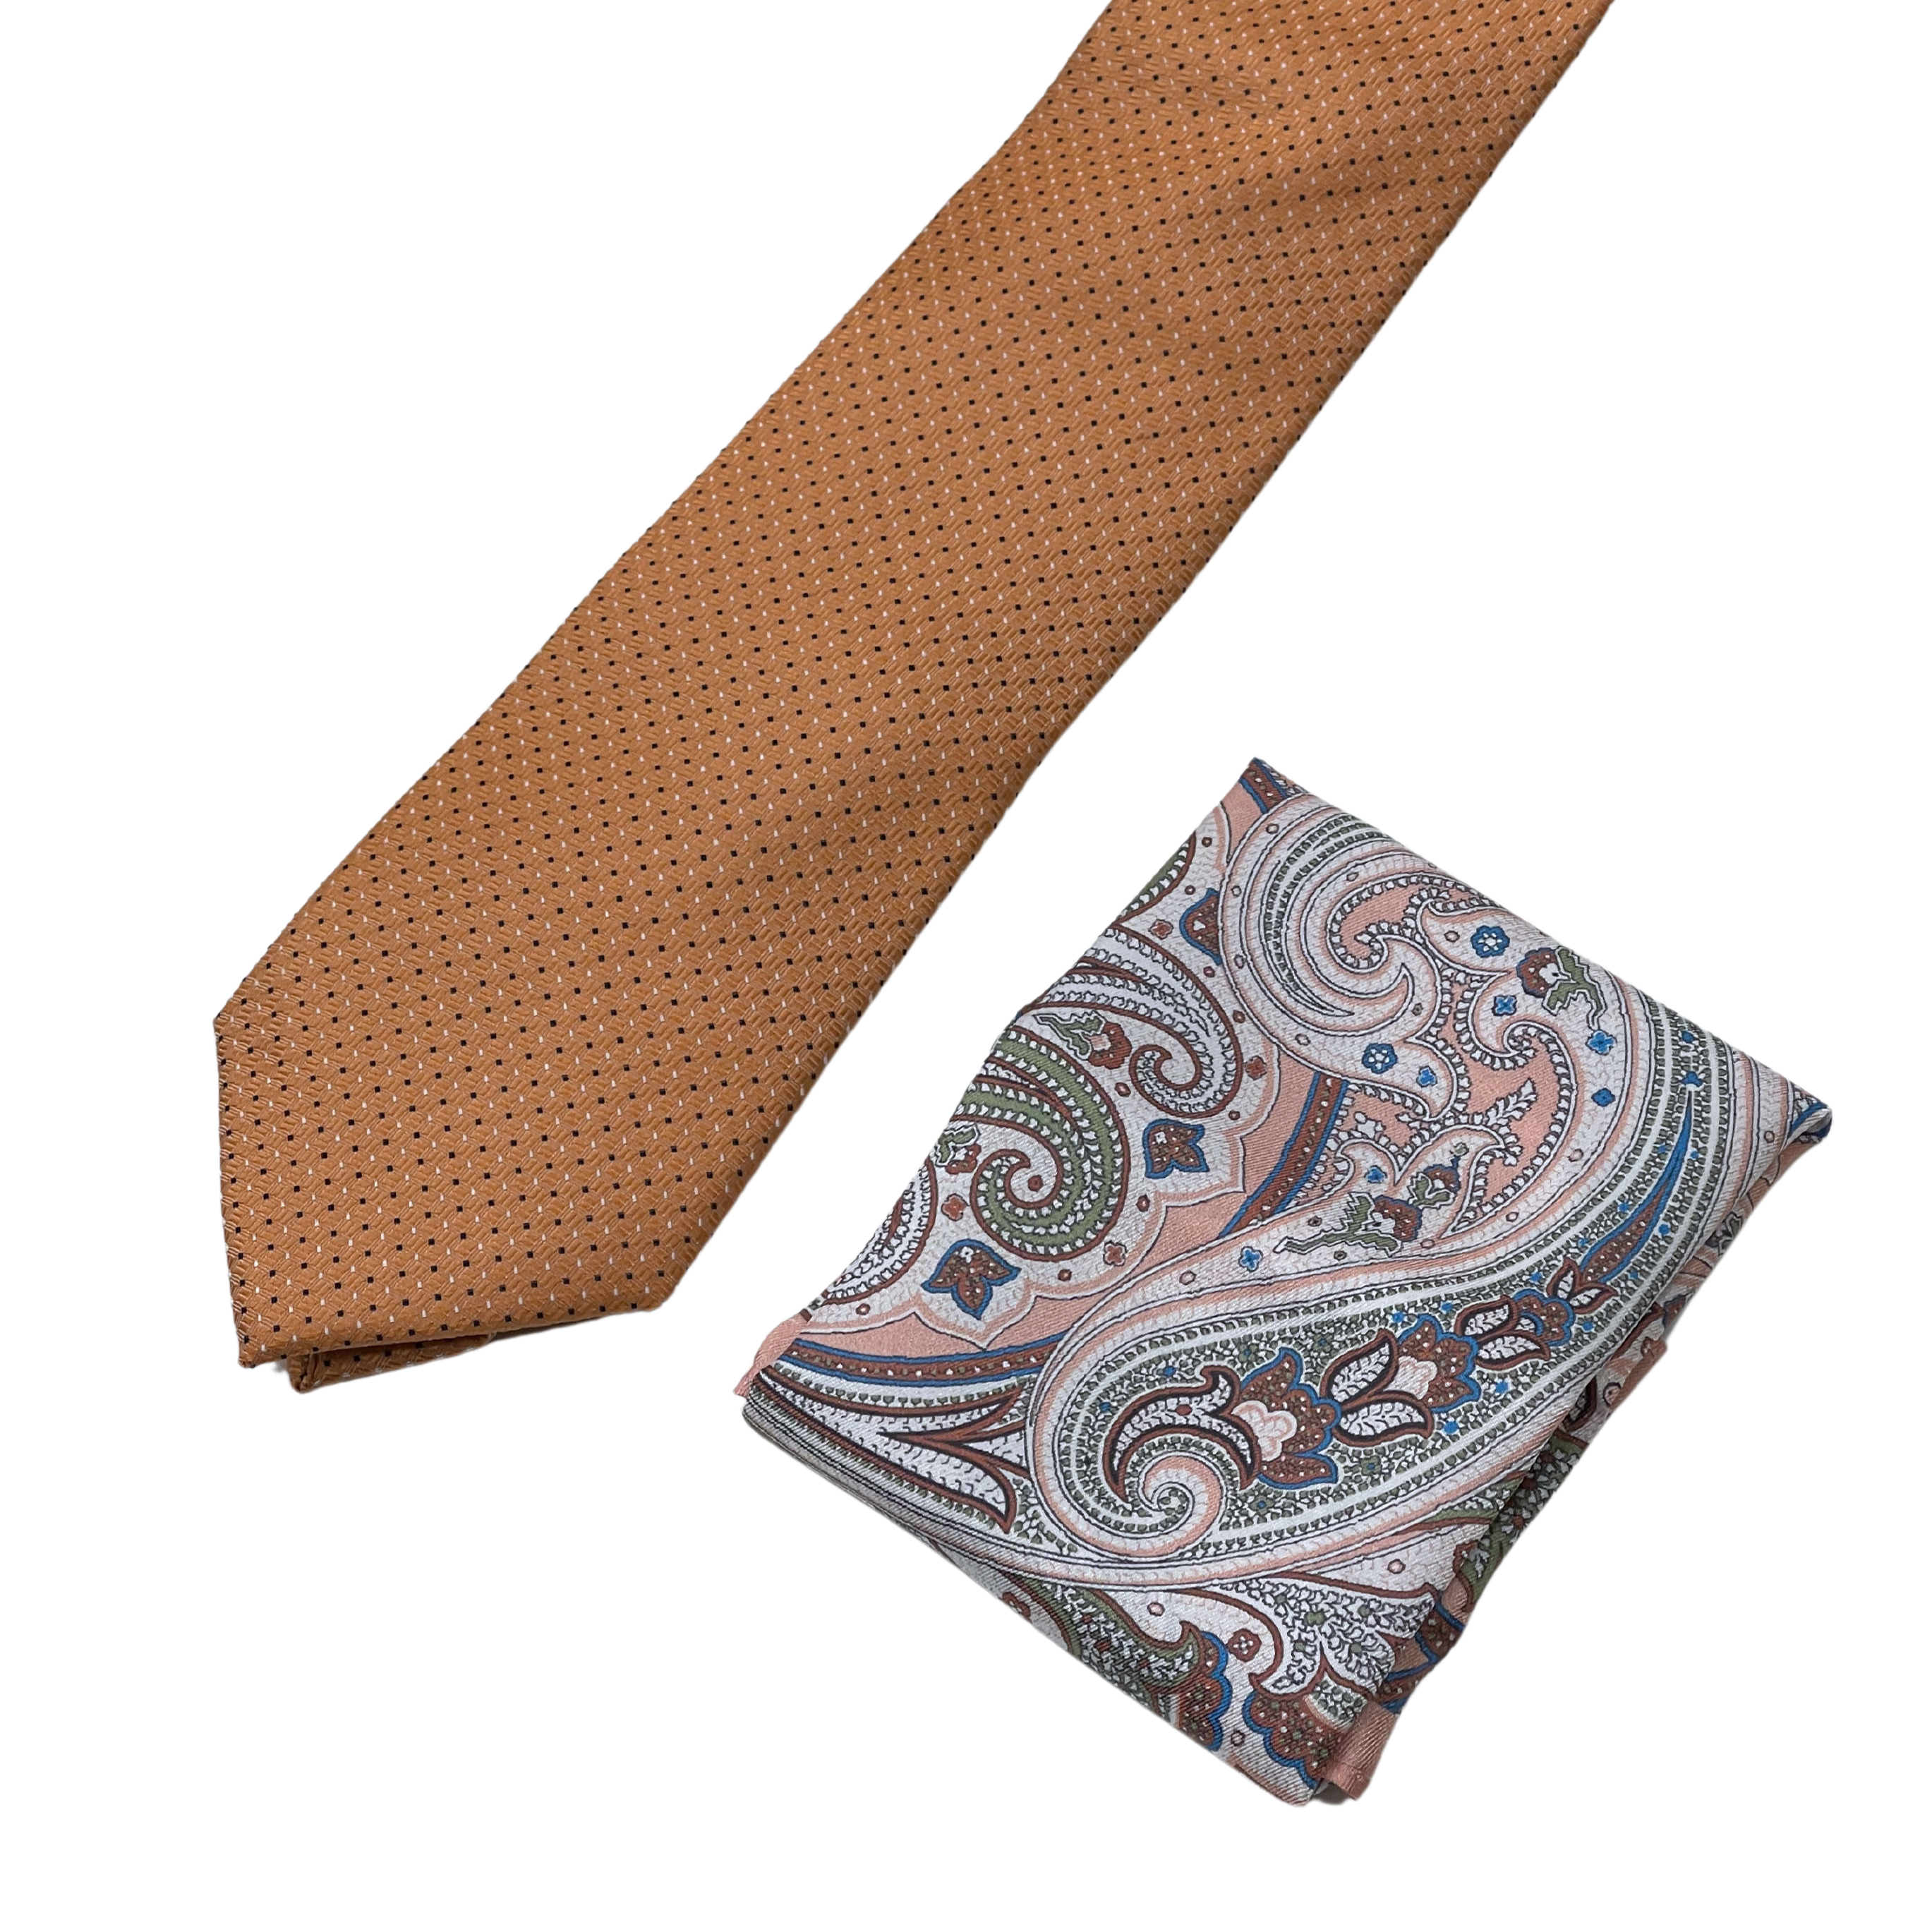 Amanda Christensen oranssi solmio ja taskuliina "Tie & Pocket square box set"